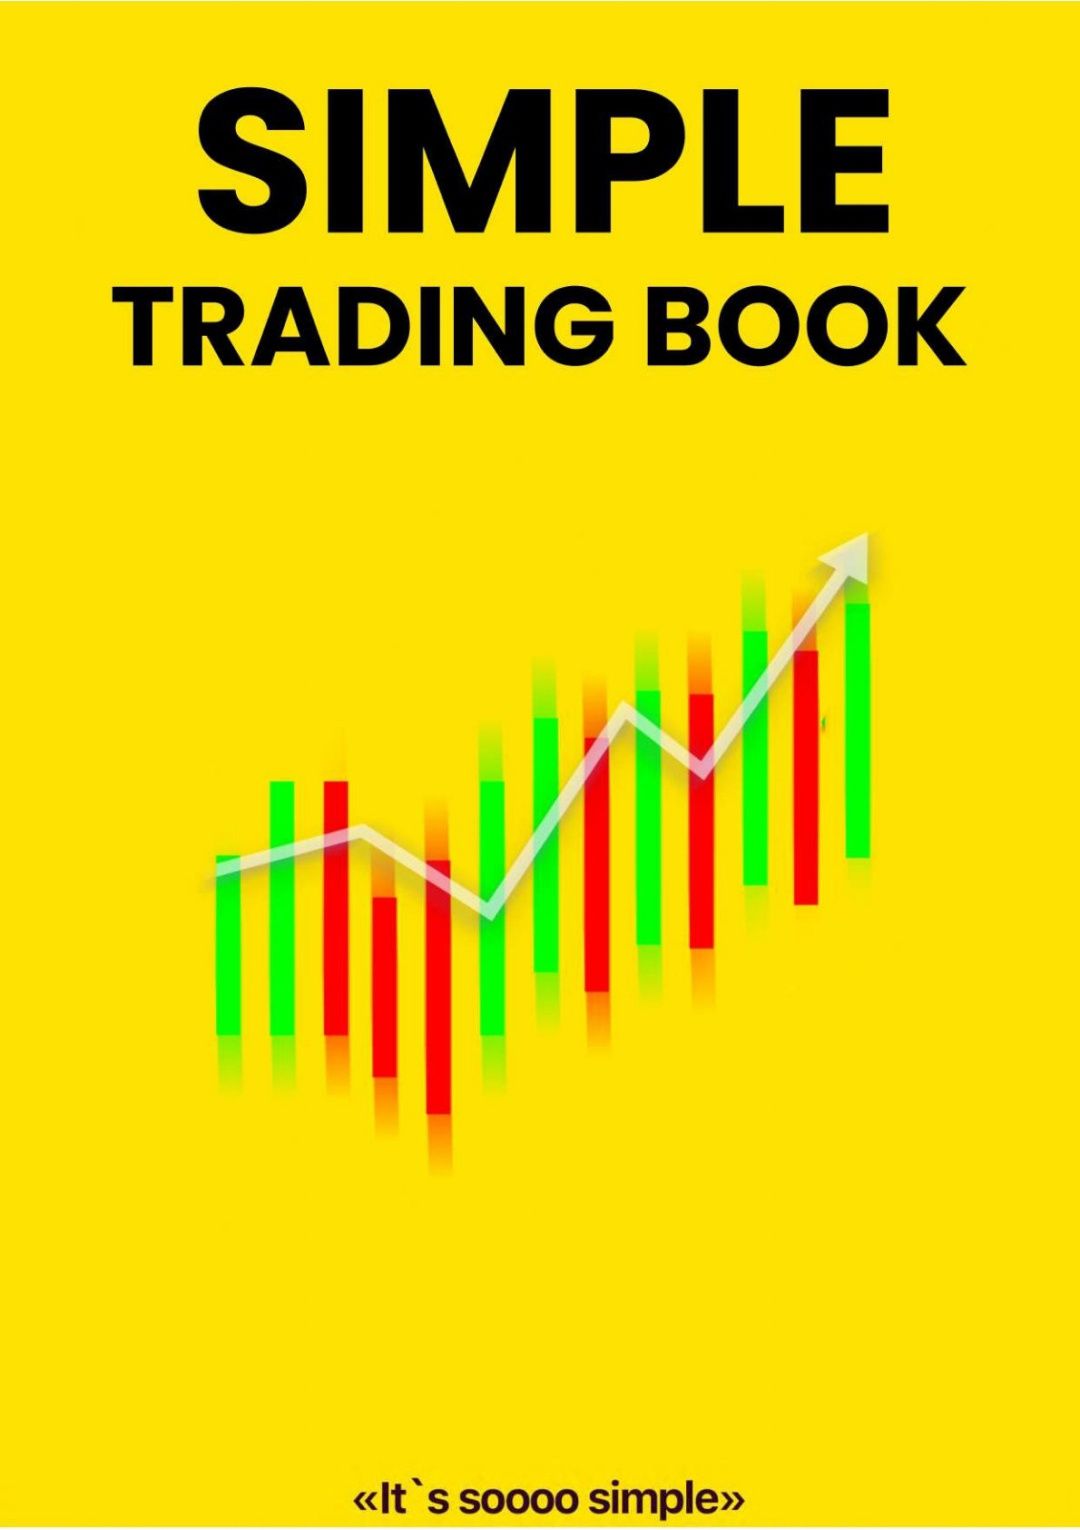 Simple Trading book ingiliz tilida PDF